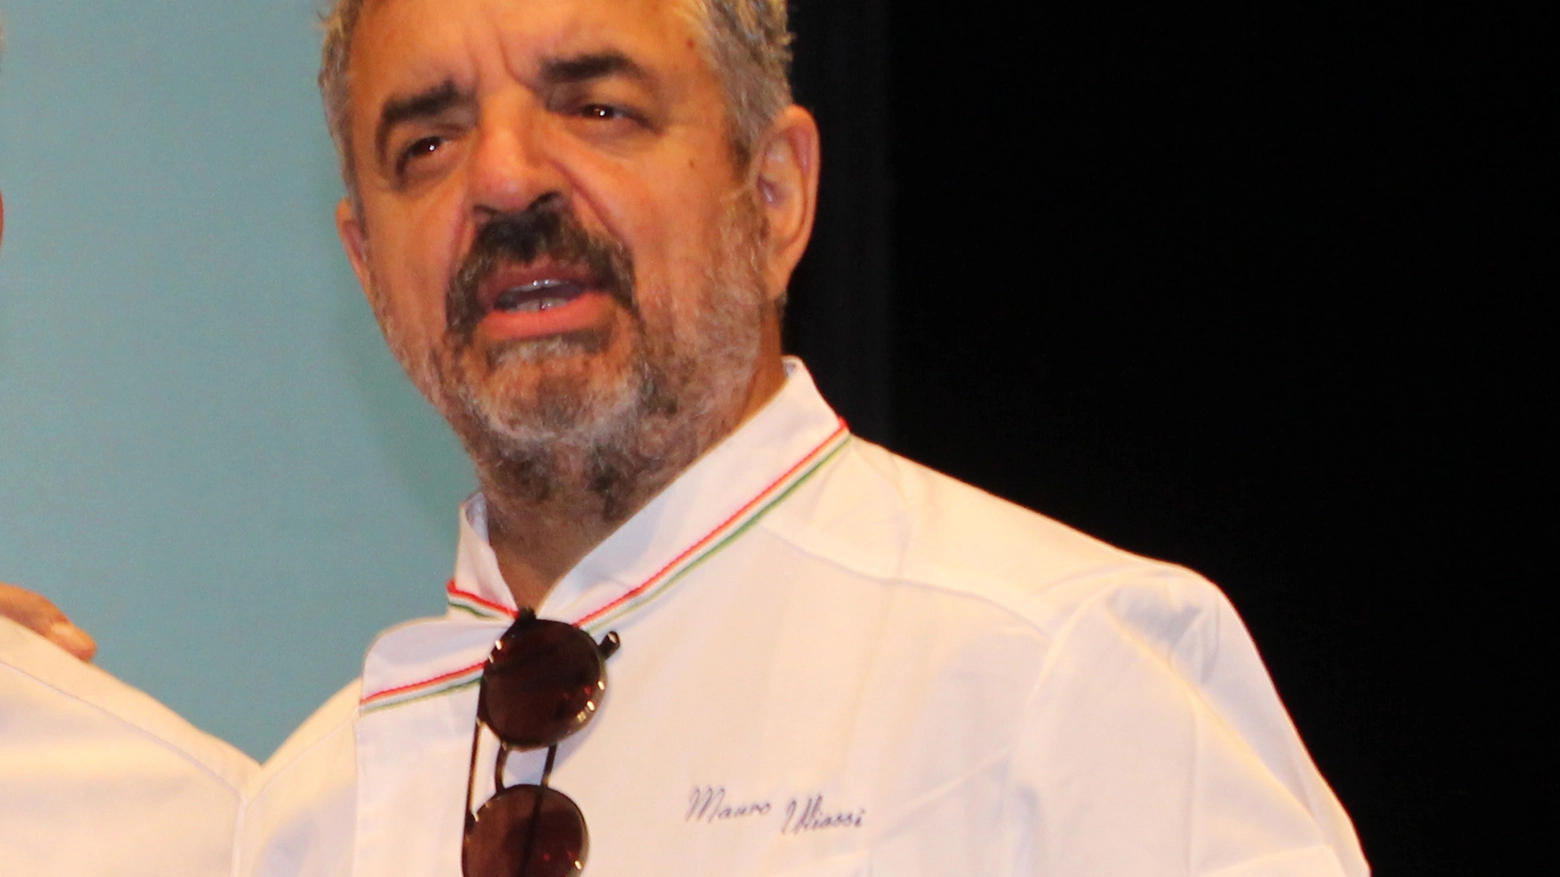 Mauro Uliassi, ristorante Uliassi - Senigallia